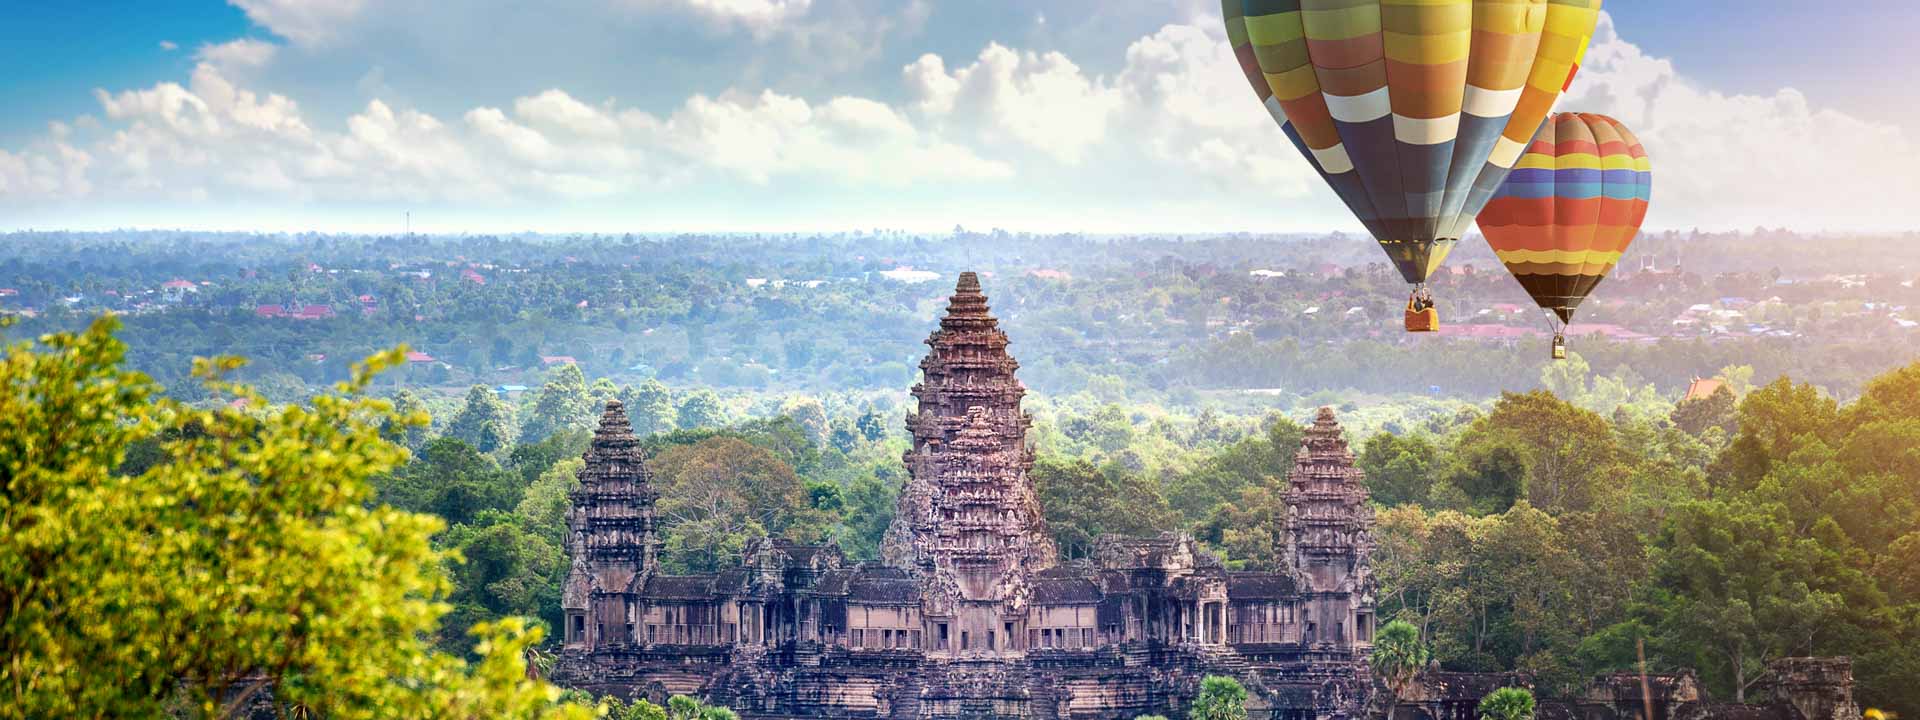 Vietnam & Cambodia World Heritage Tour in 16 days